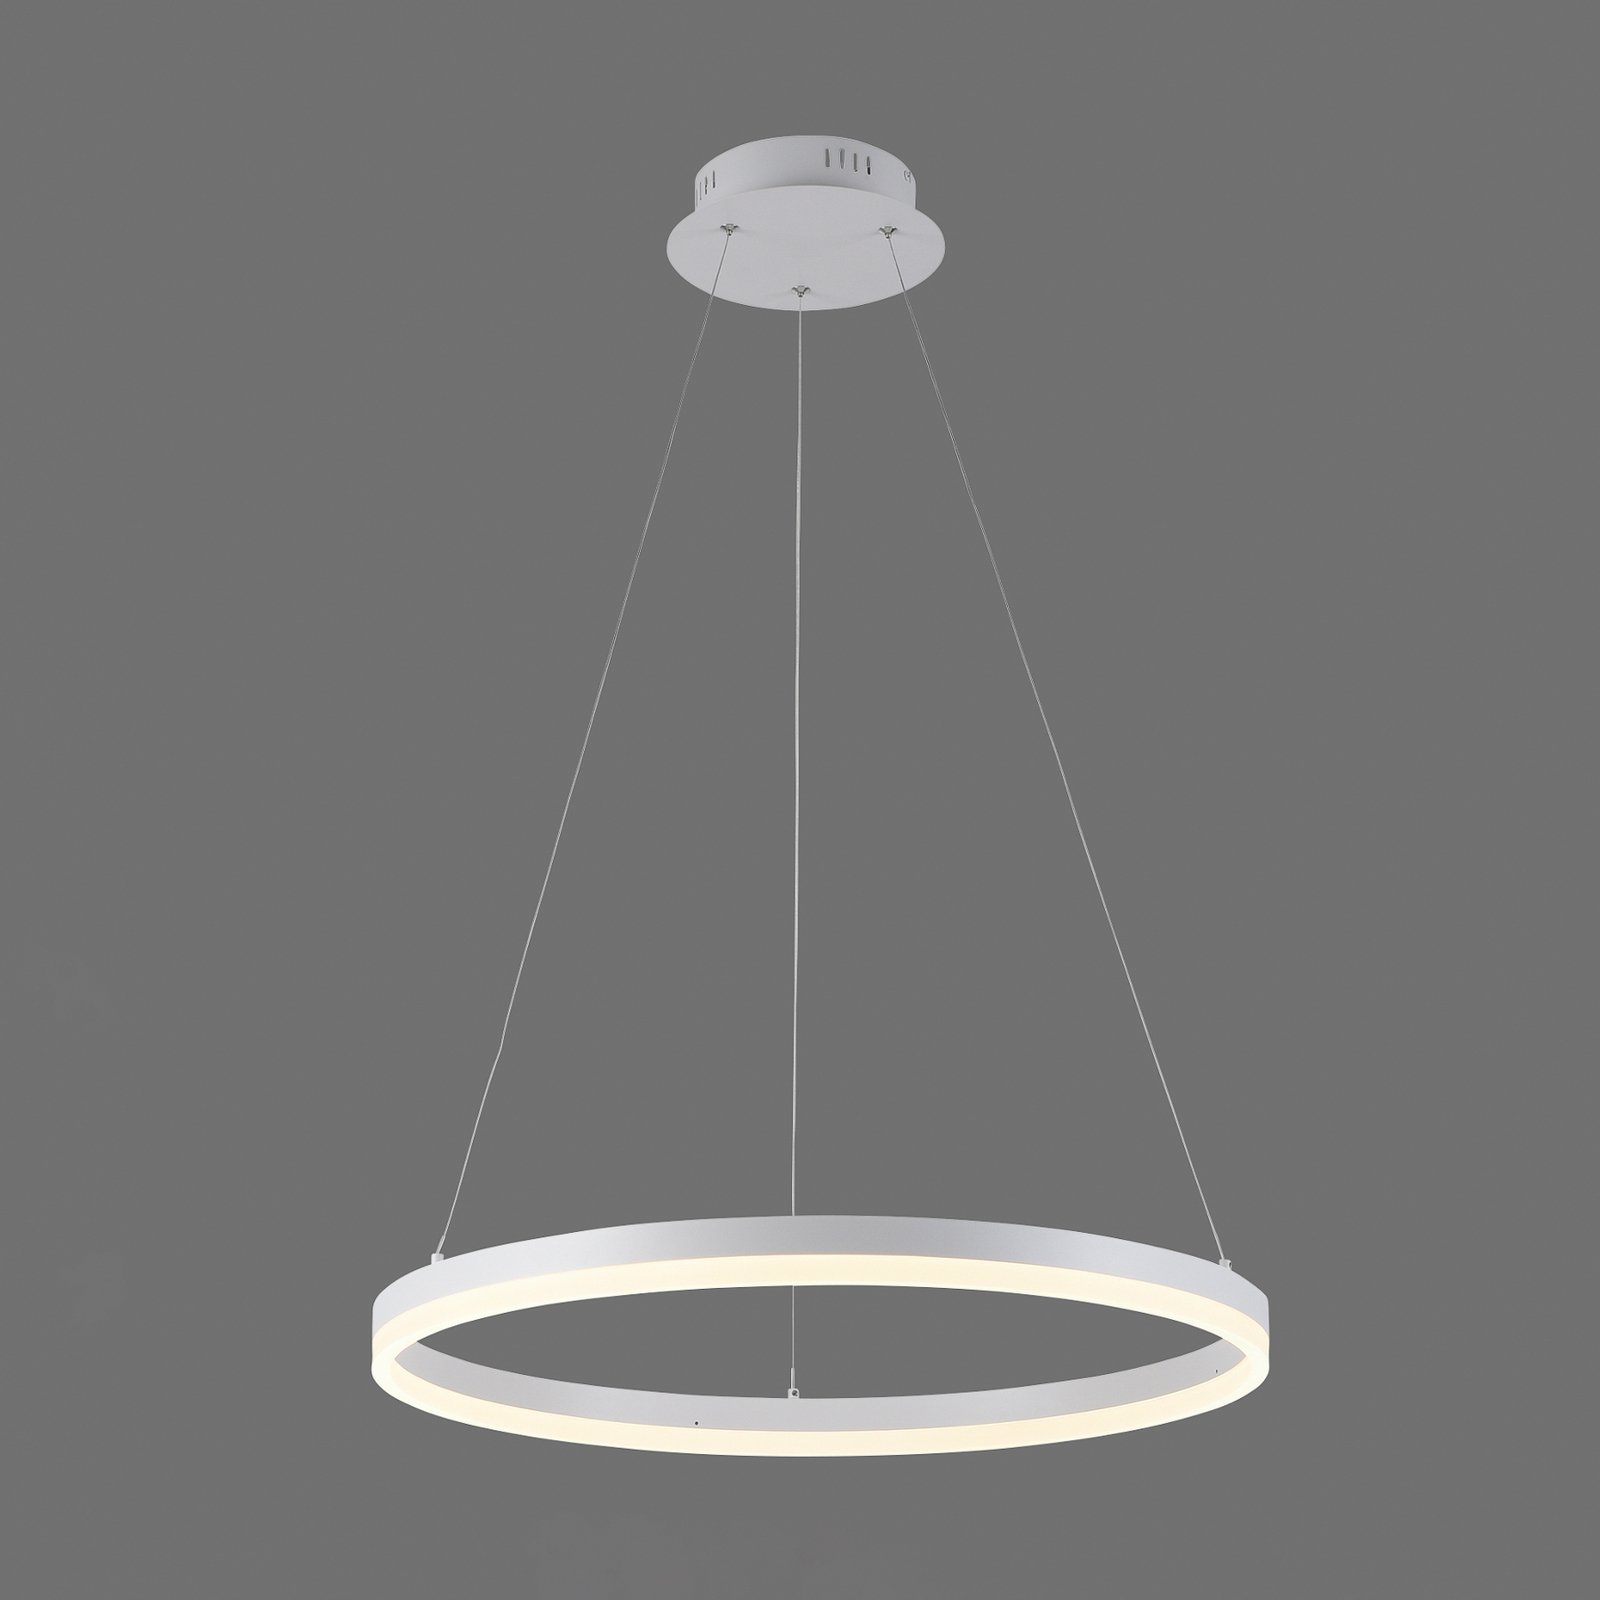 LED hanglamp Titus, rond, Ø 60 cm, wit